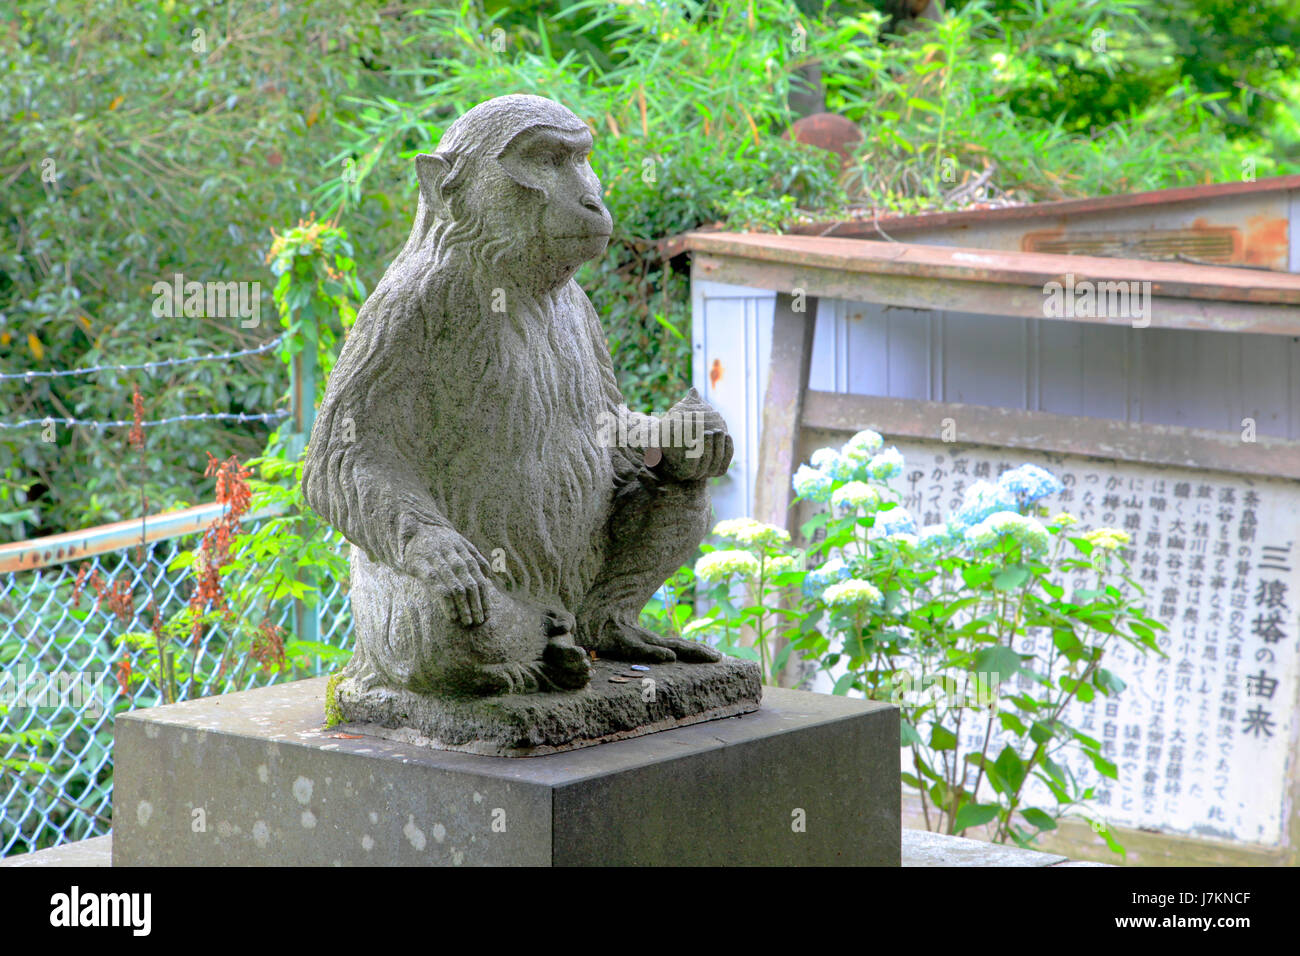 A Statue of Monkey at Saruhashi Otsuki city Yamanashi Japan Stock Photo